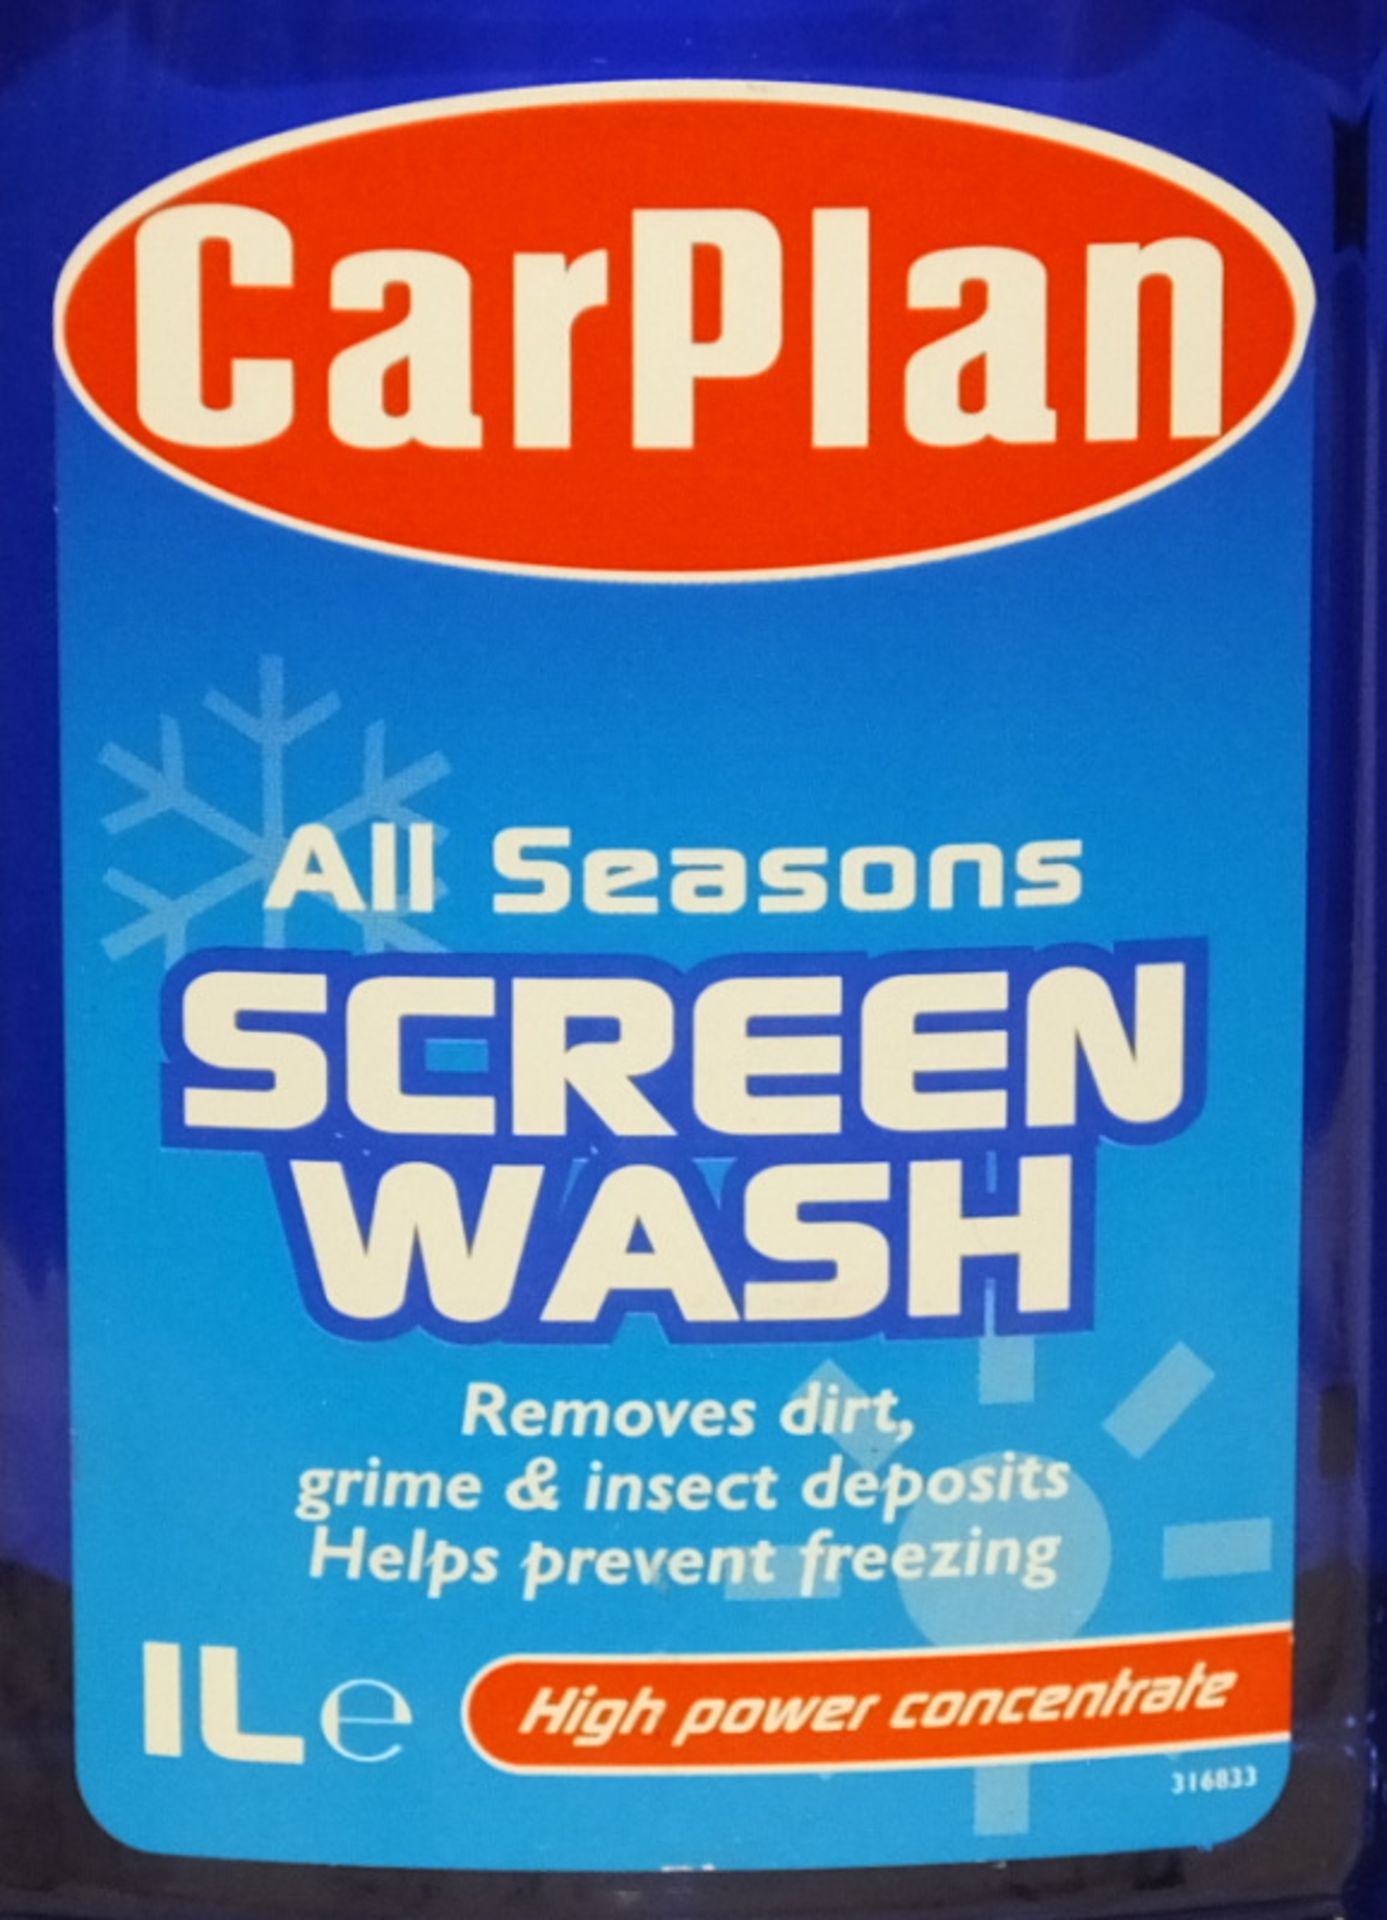 15x CarPlan screenwash 1L - Image 2 of 2